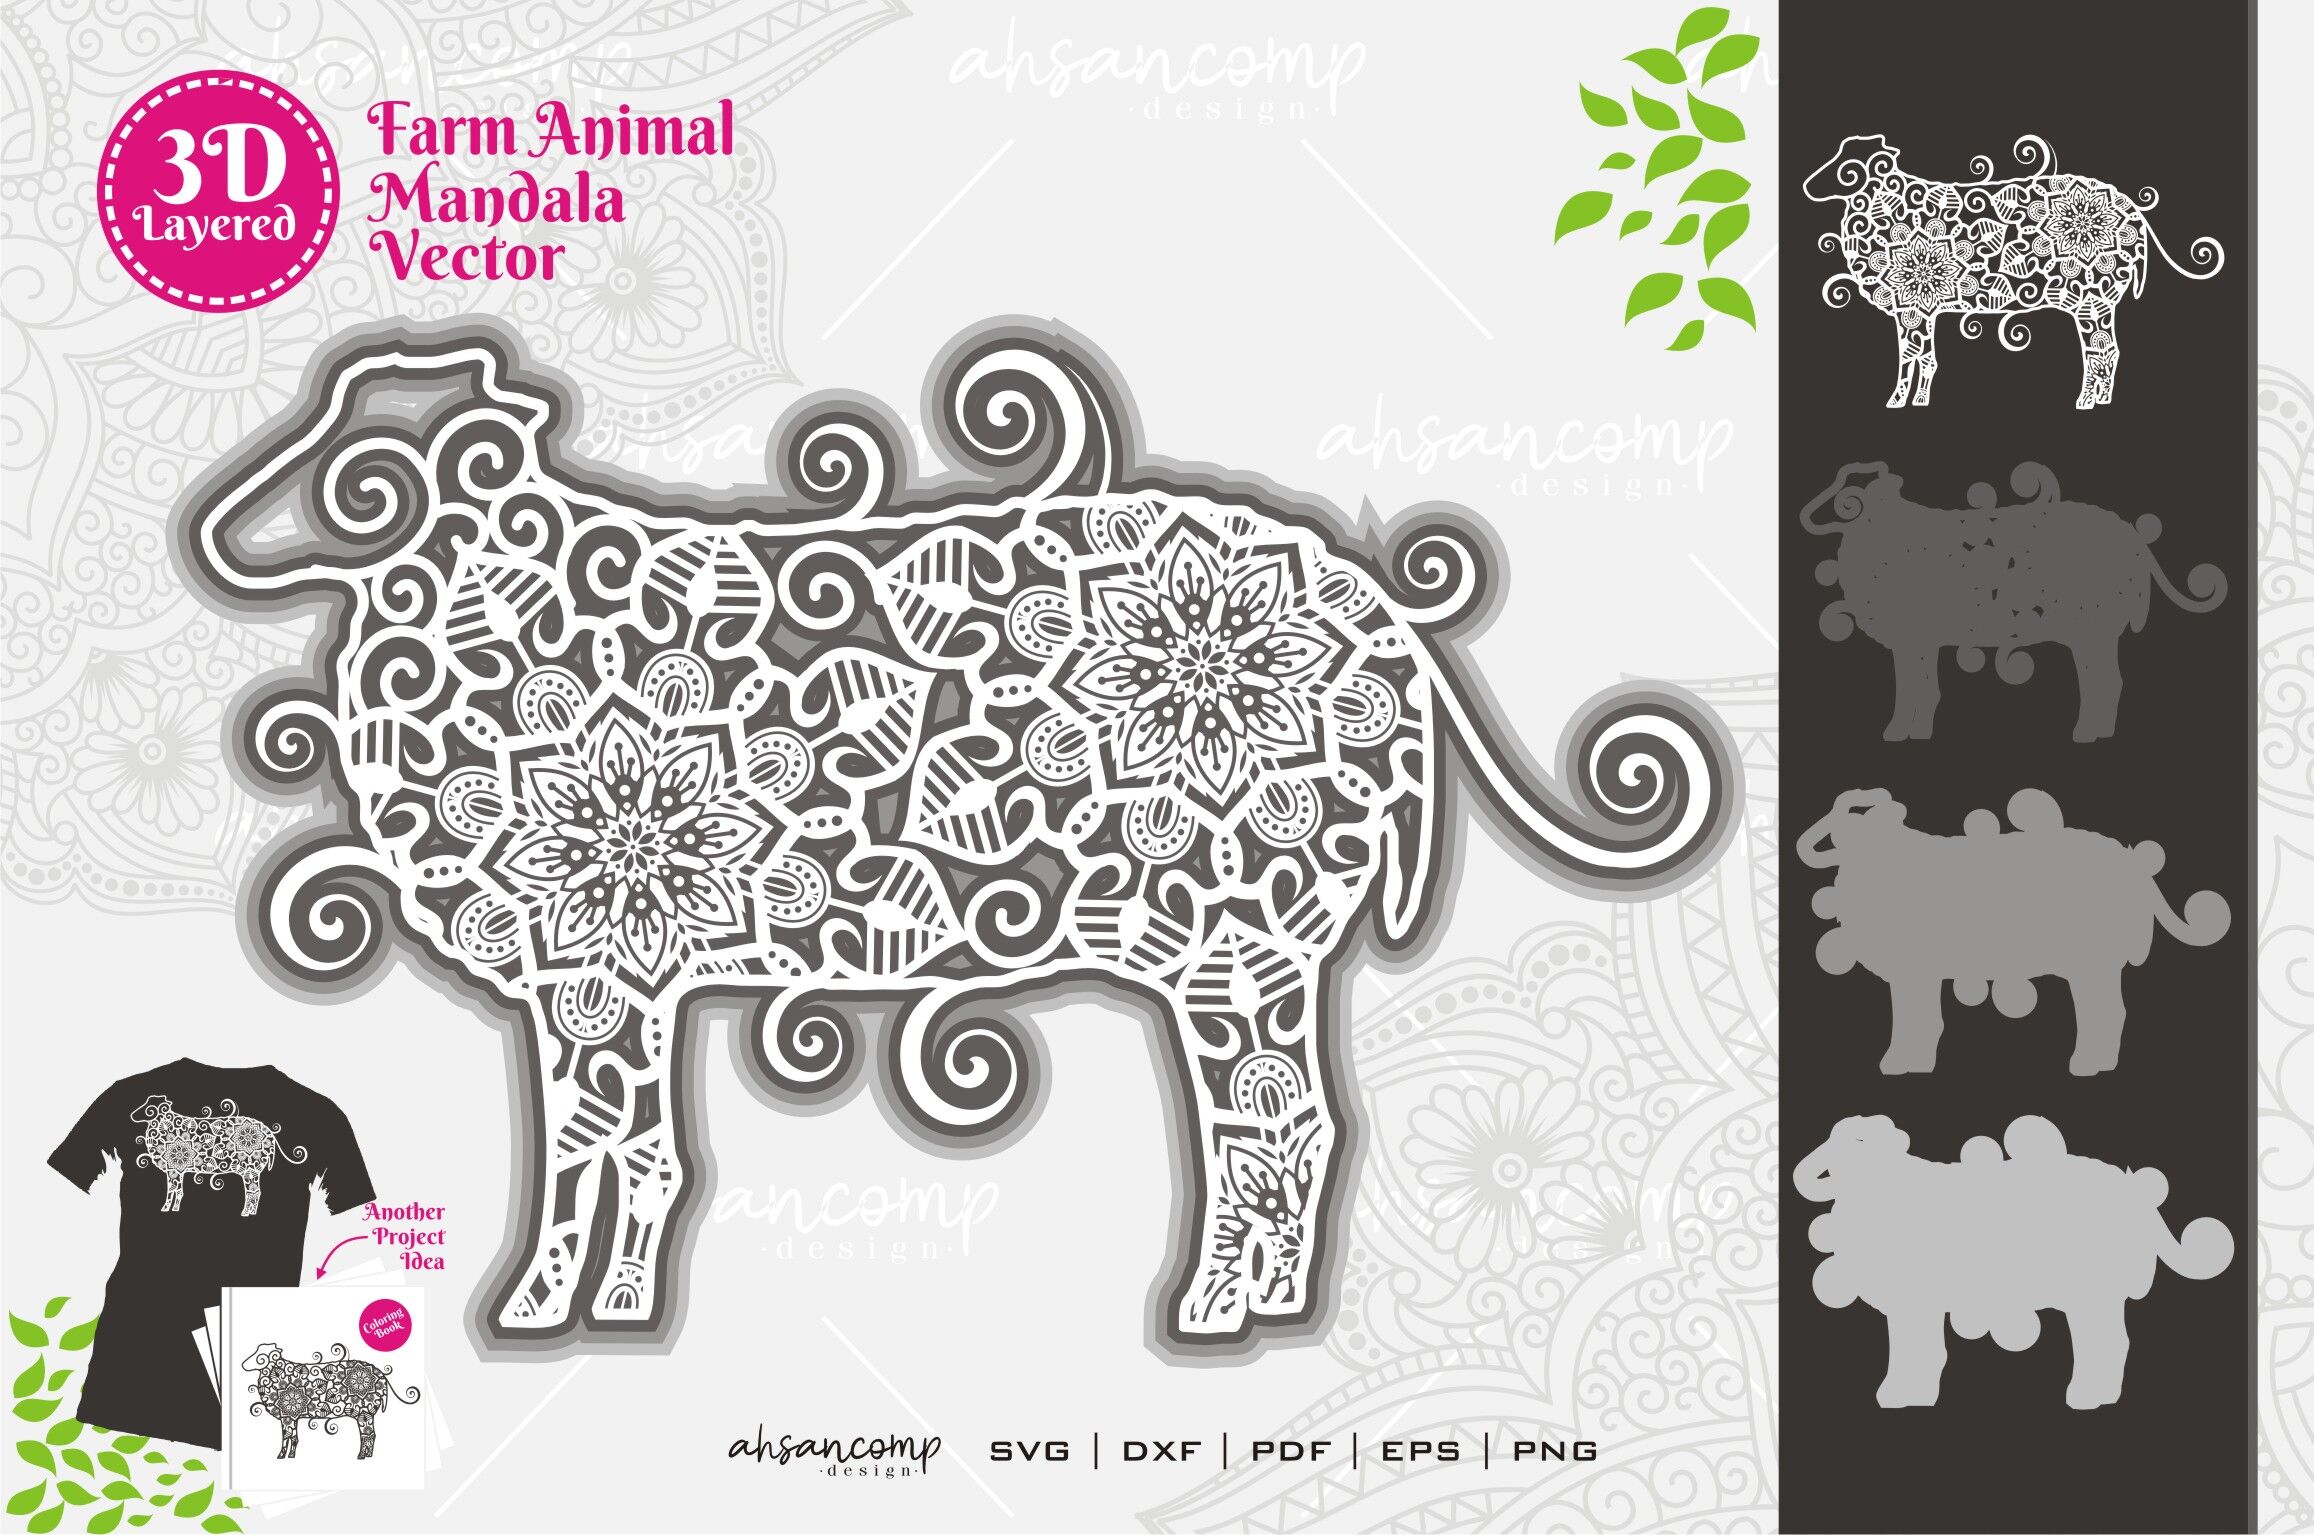 Download Farm Animal Mandala Svg 3d Layered 8 By Ahsancomp Studio Thehungryjpeg Com